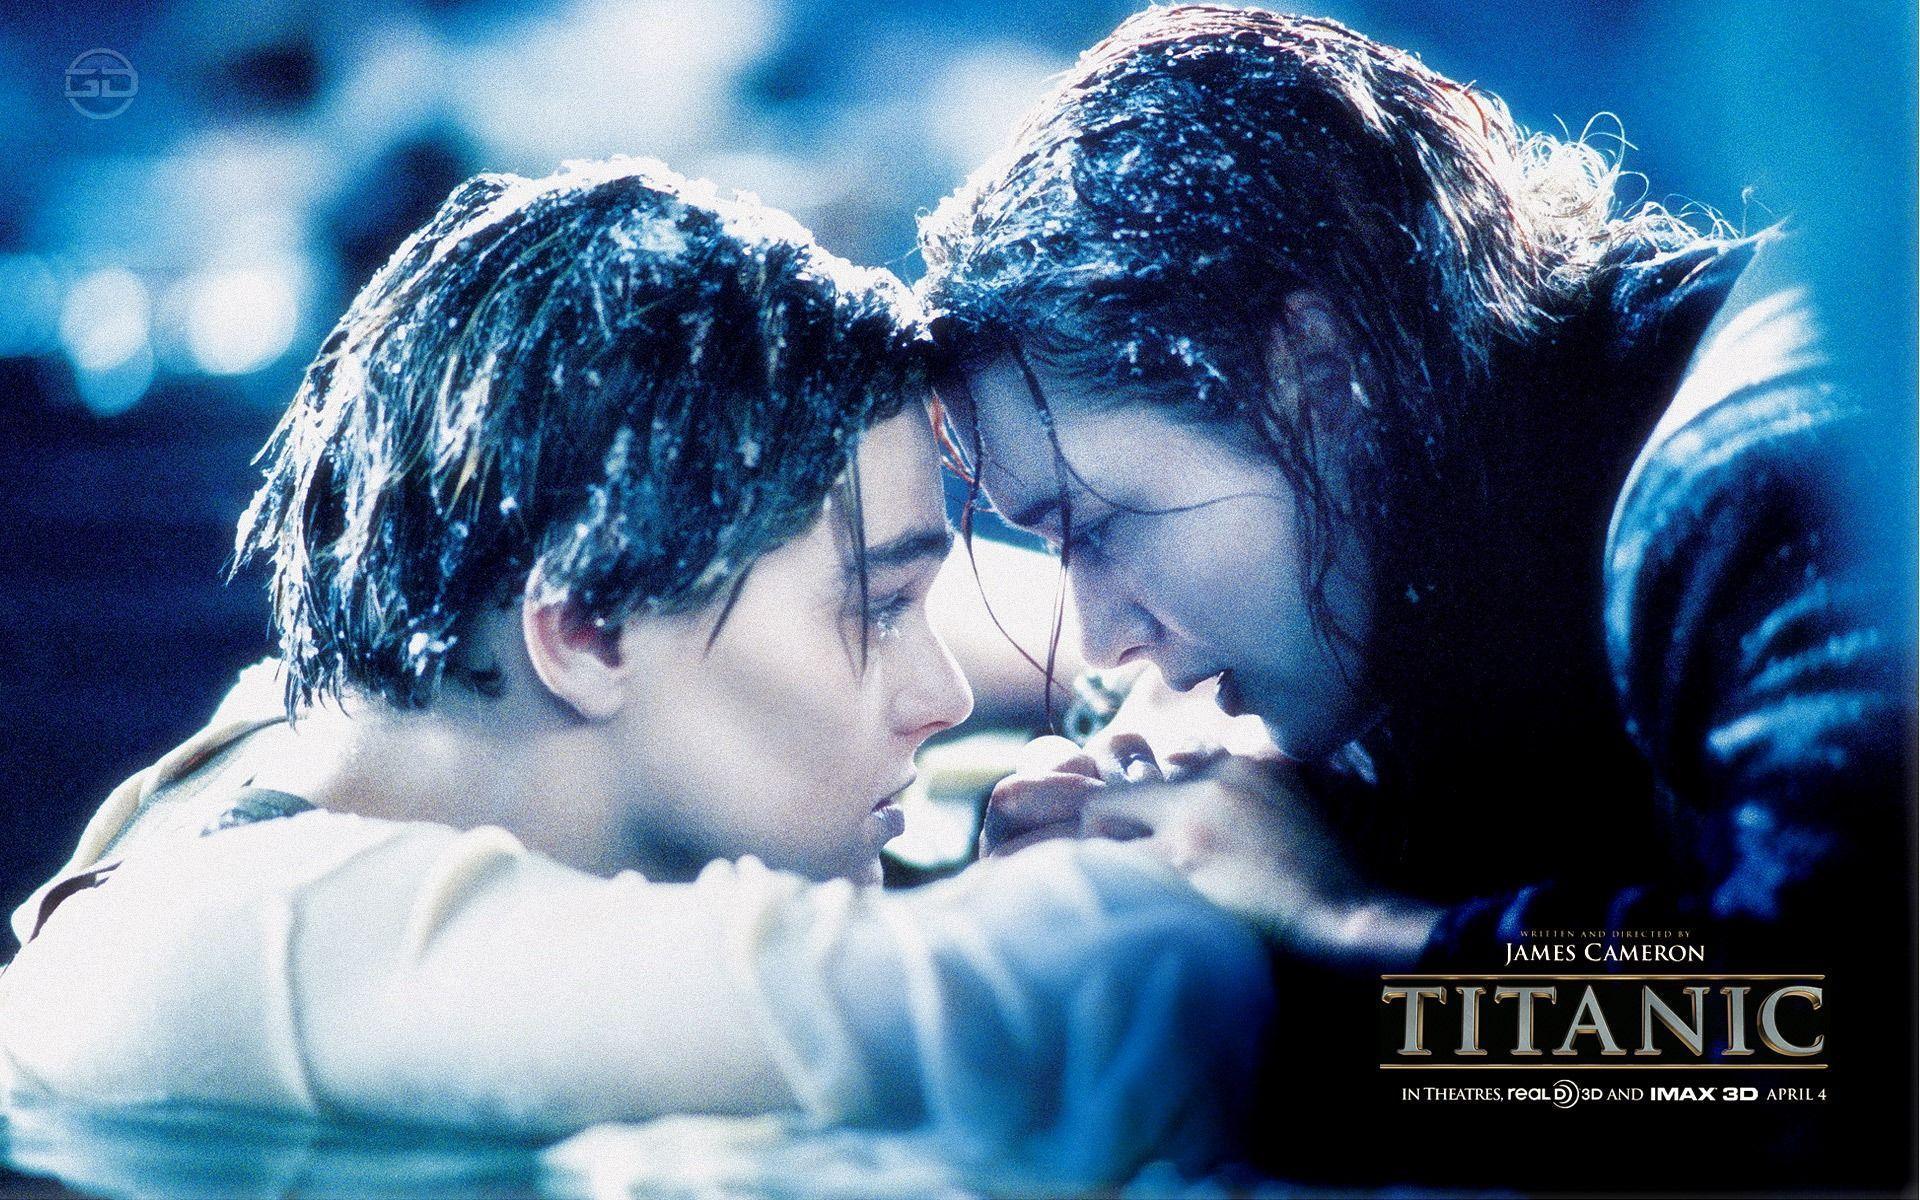 Titanic Theme Song. Movie Theme Songs & TV Soundtracks